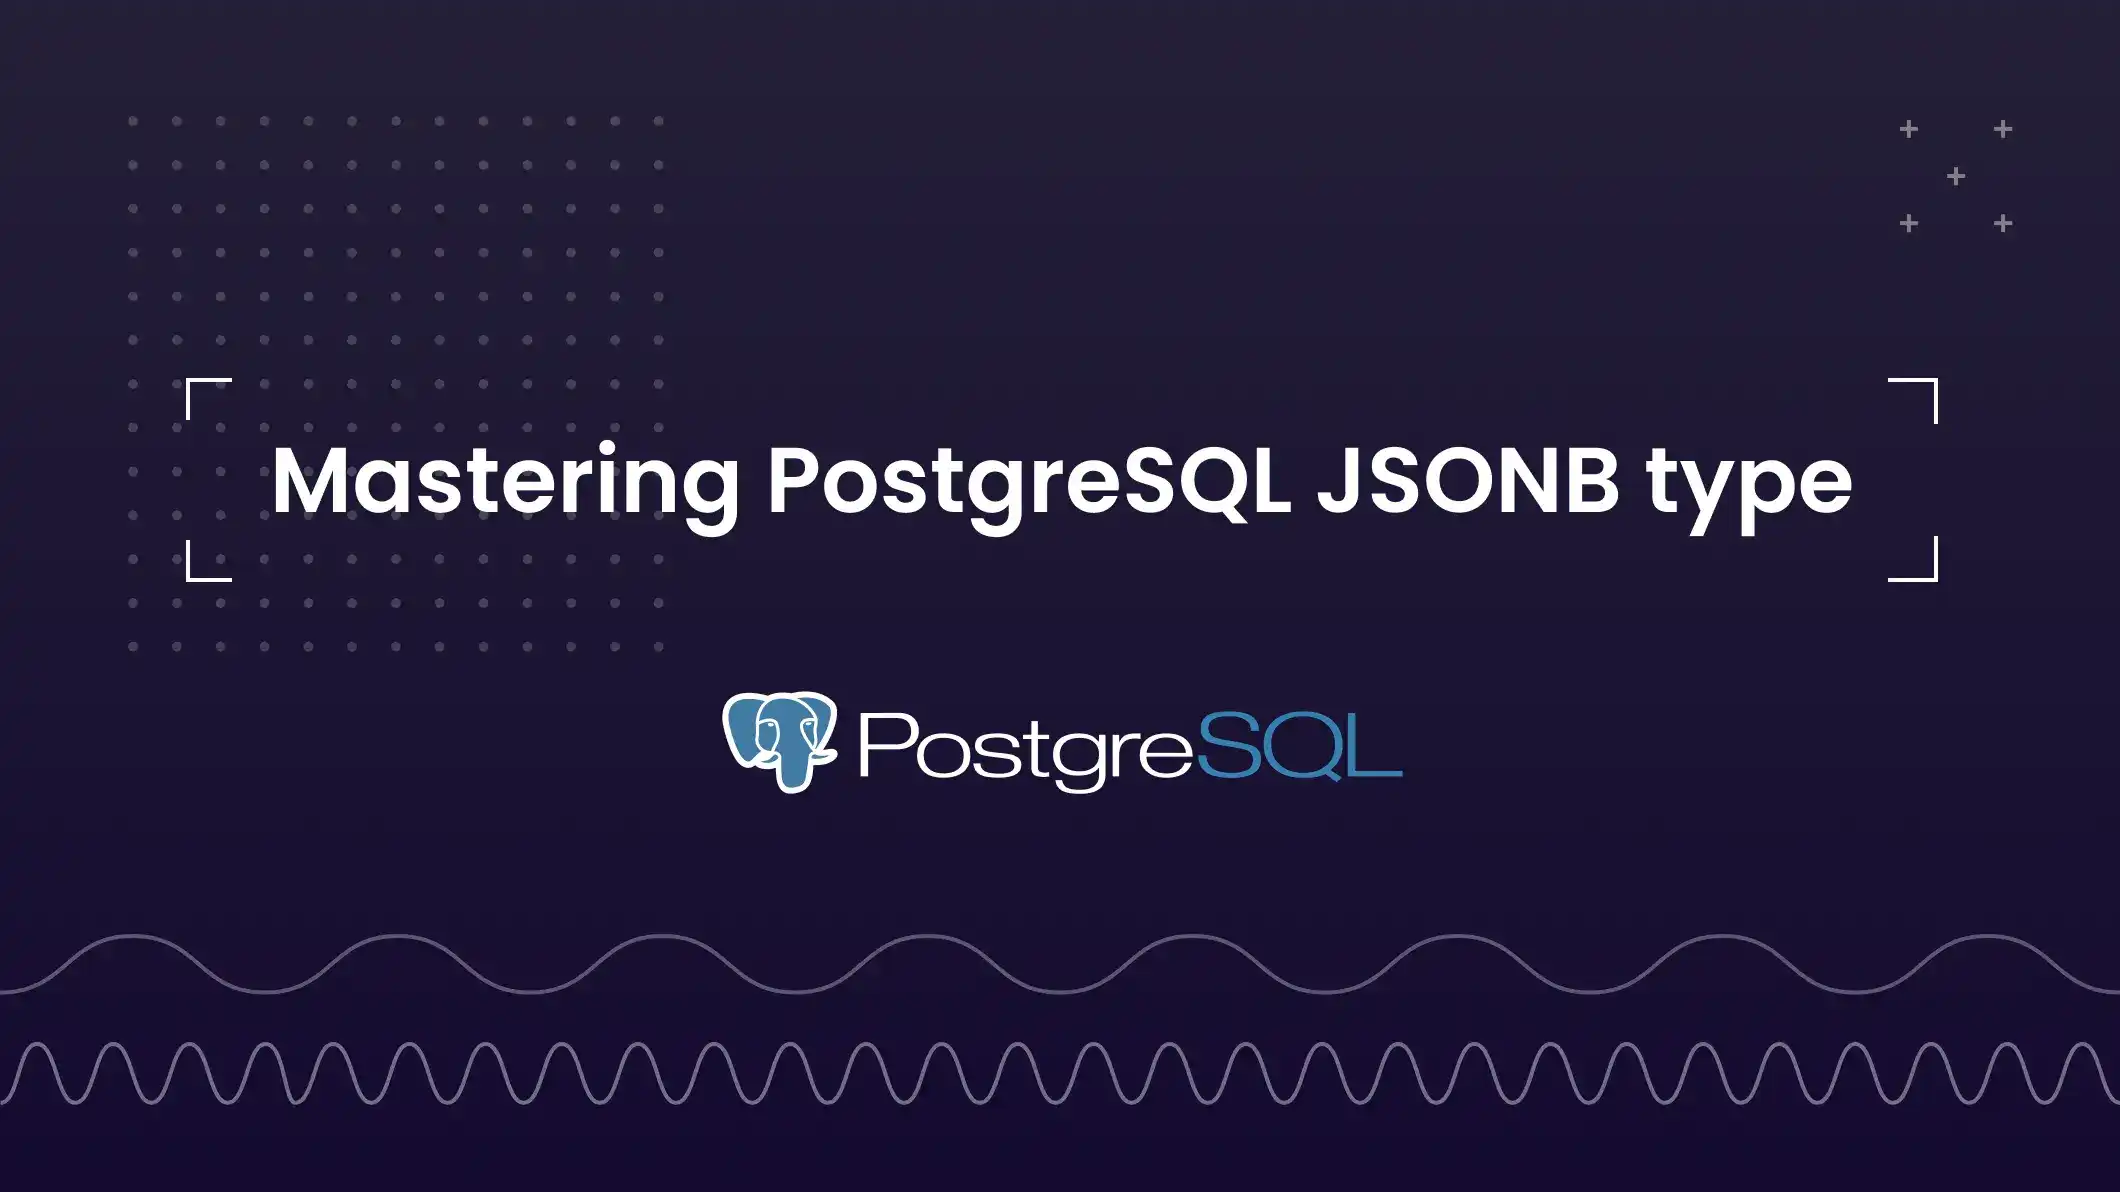 Mastering PostgreSQL JSONB type in one article